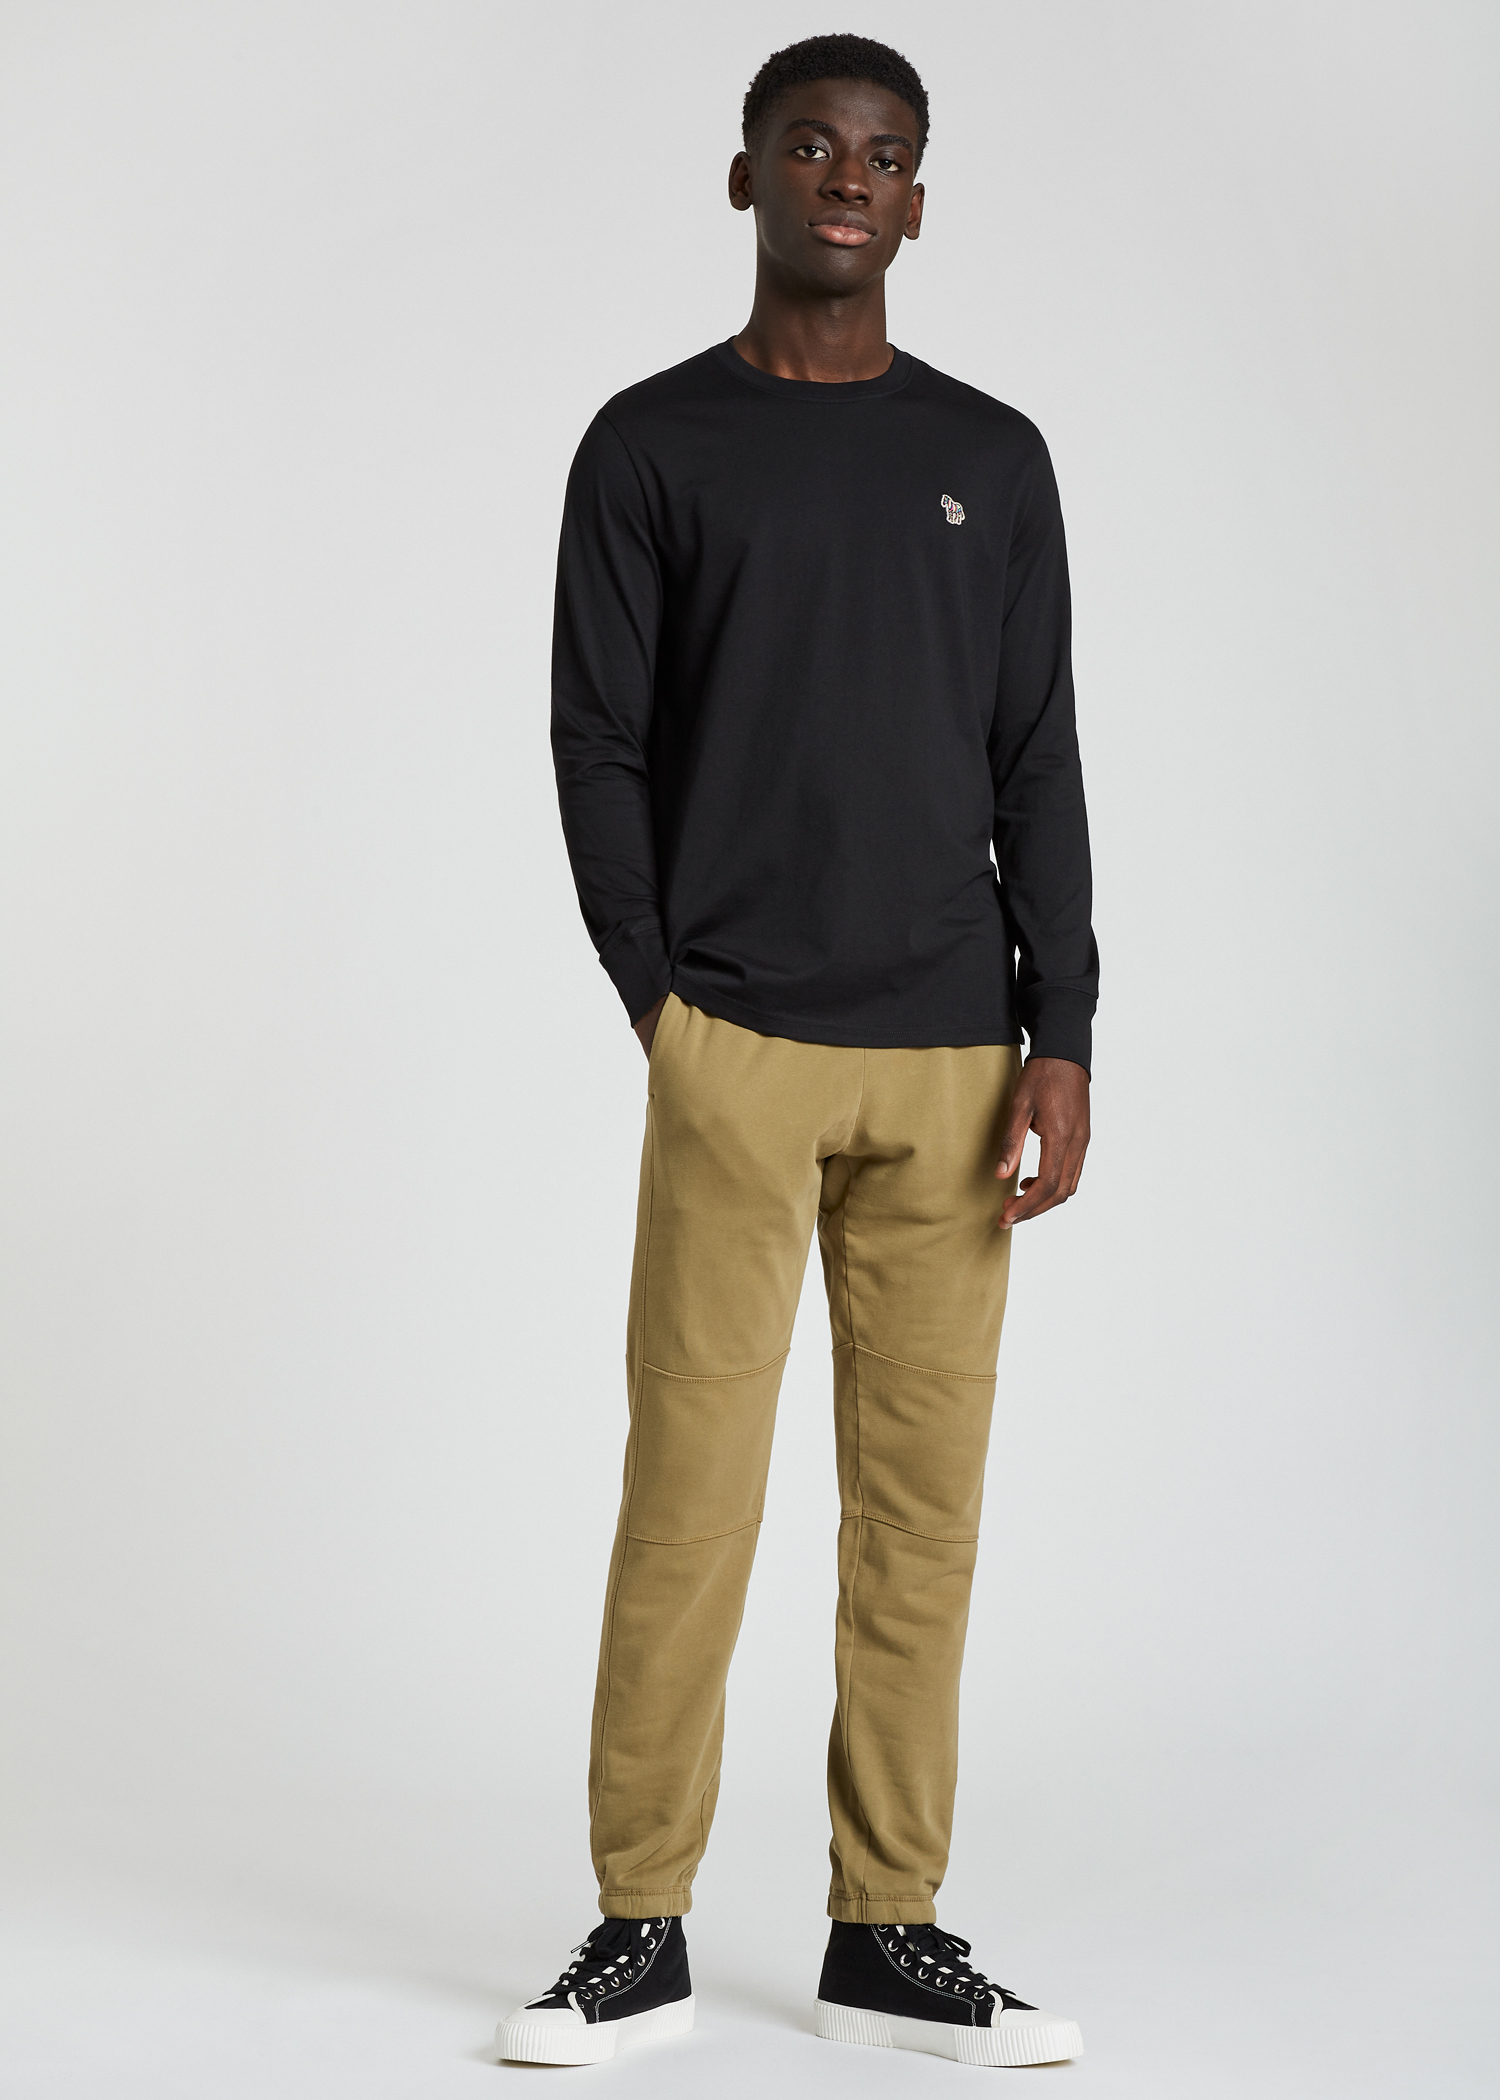 Model shot full length outfit - Men's Black Organic-Cotton Zebra Logo Long-Sleeve T-Shirt by Paul Smith